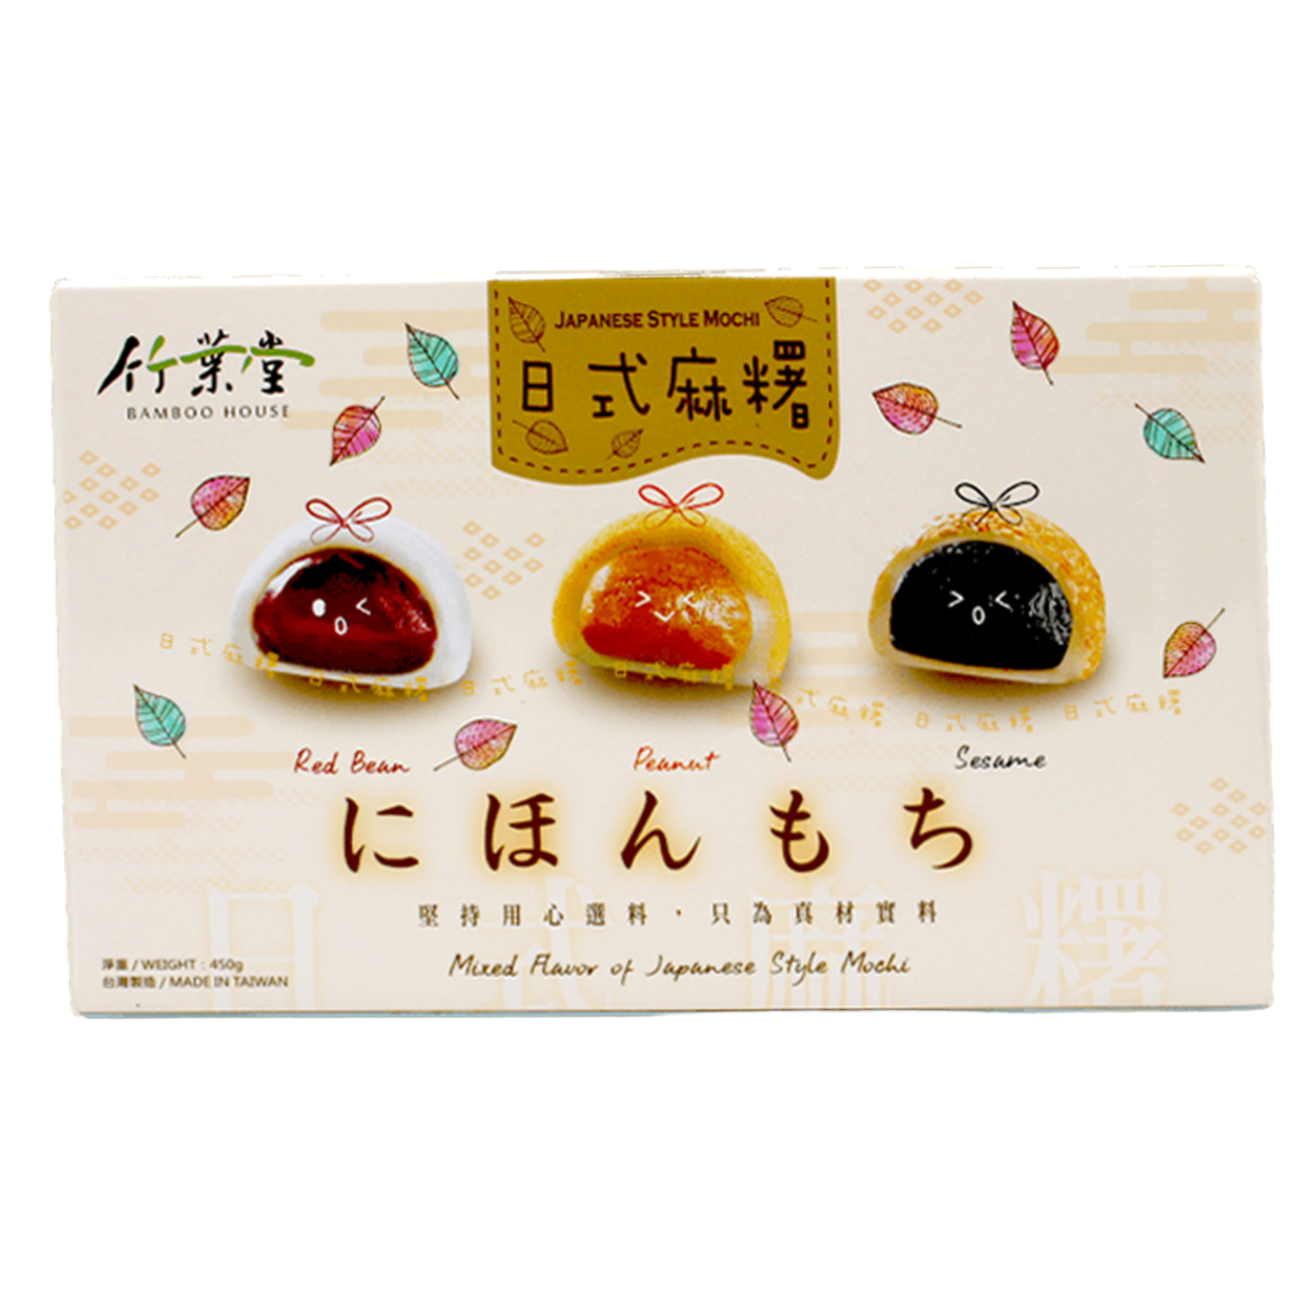 Image Japanese Mochi 竹叶堂-日式麻薯 450grams